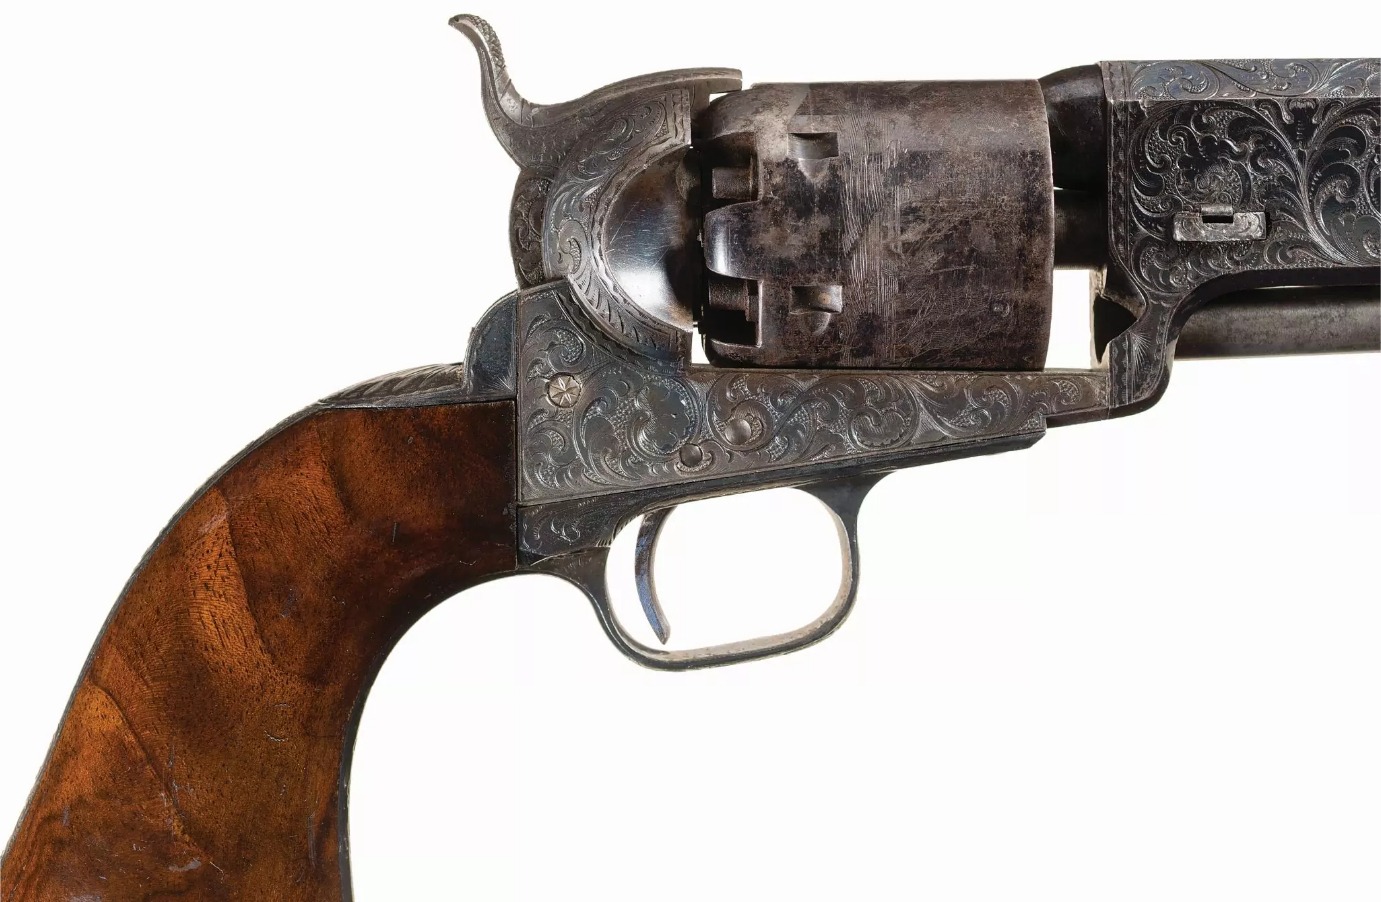 Colt M1851 Navy revolver